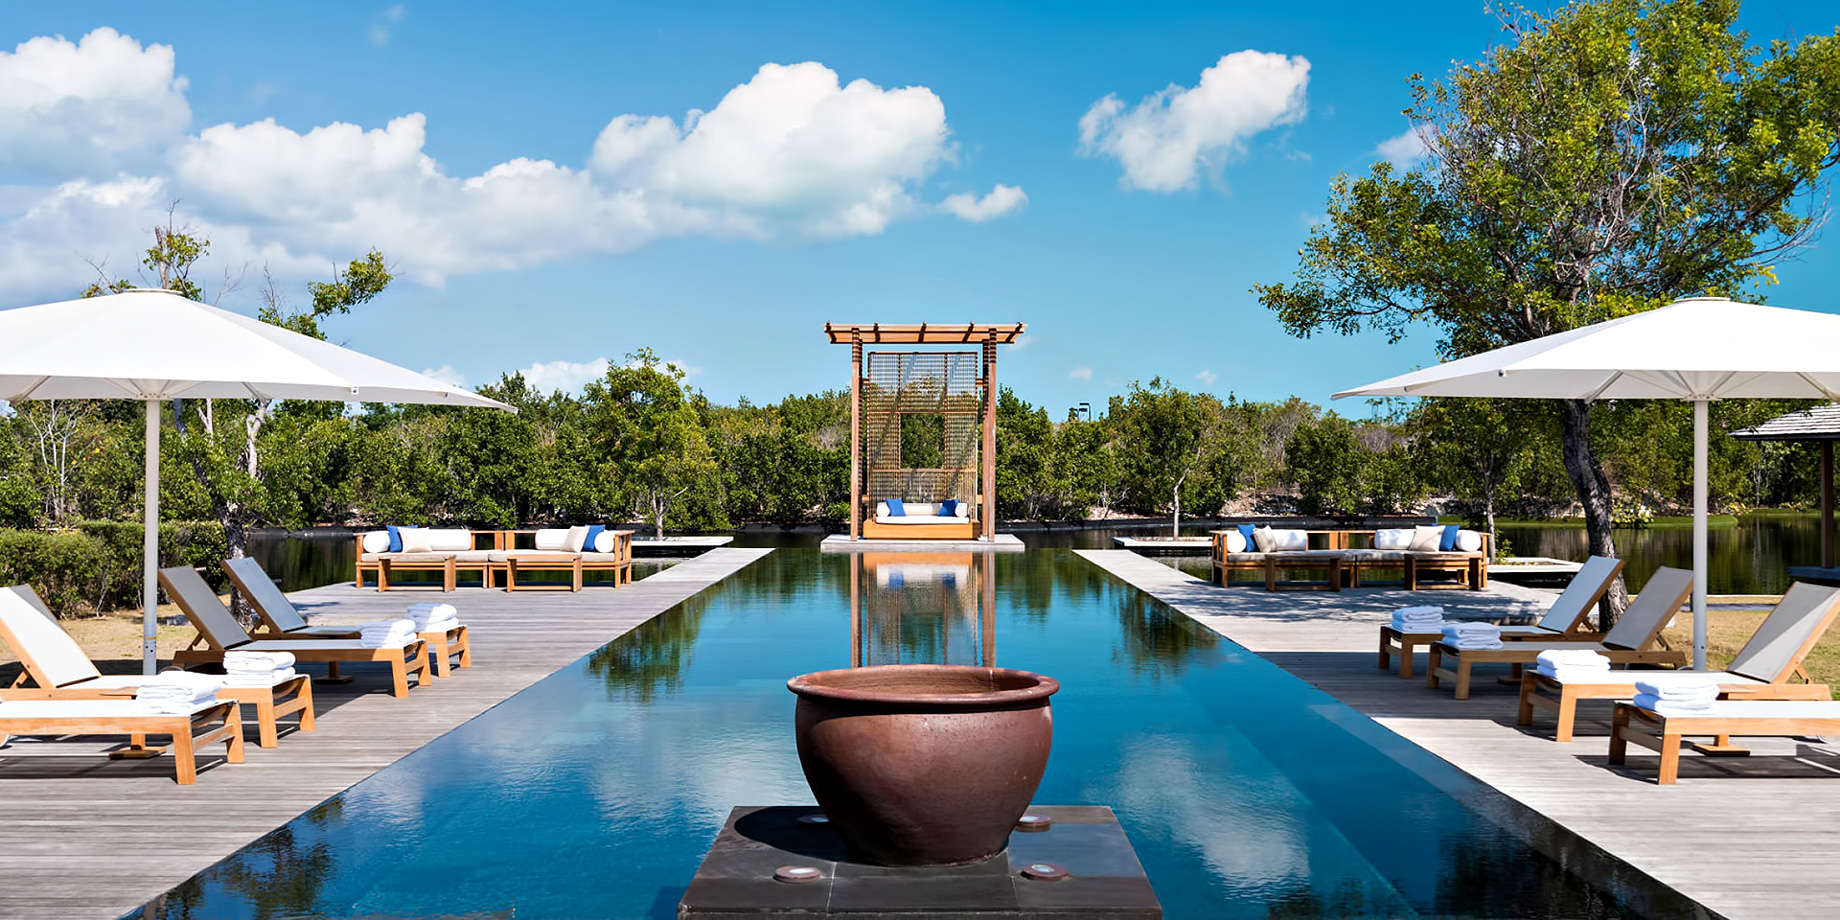 Amanyara Resort - Providenciales, Turks and Caicos Islands - 4 Bedroom Tranquility Villa Infinity Pool Deck